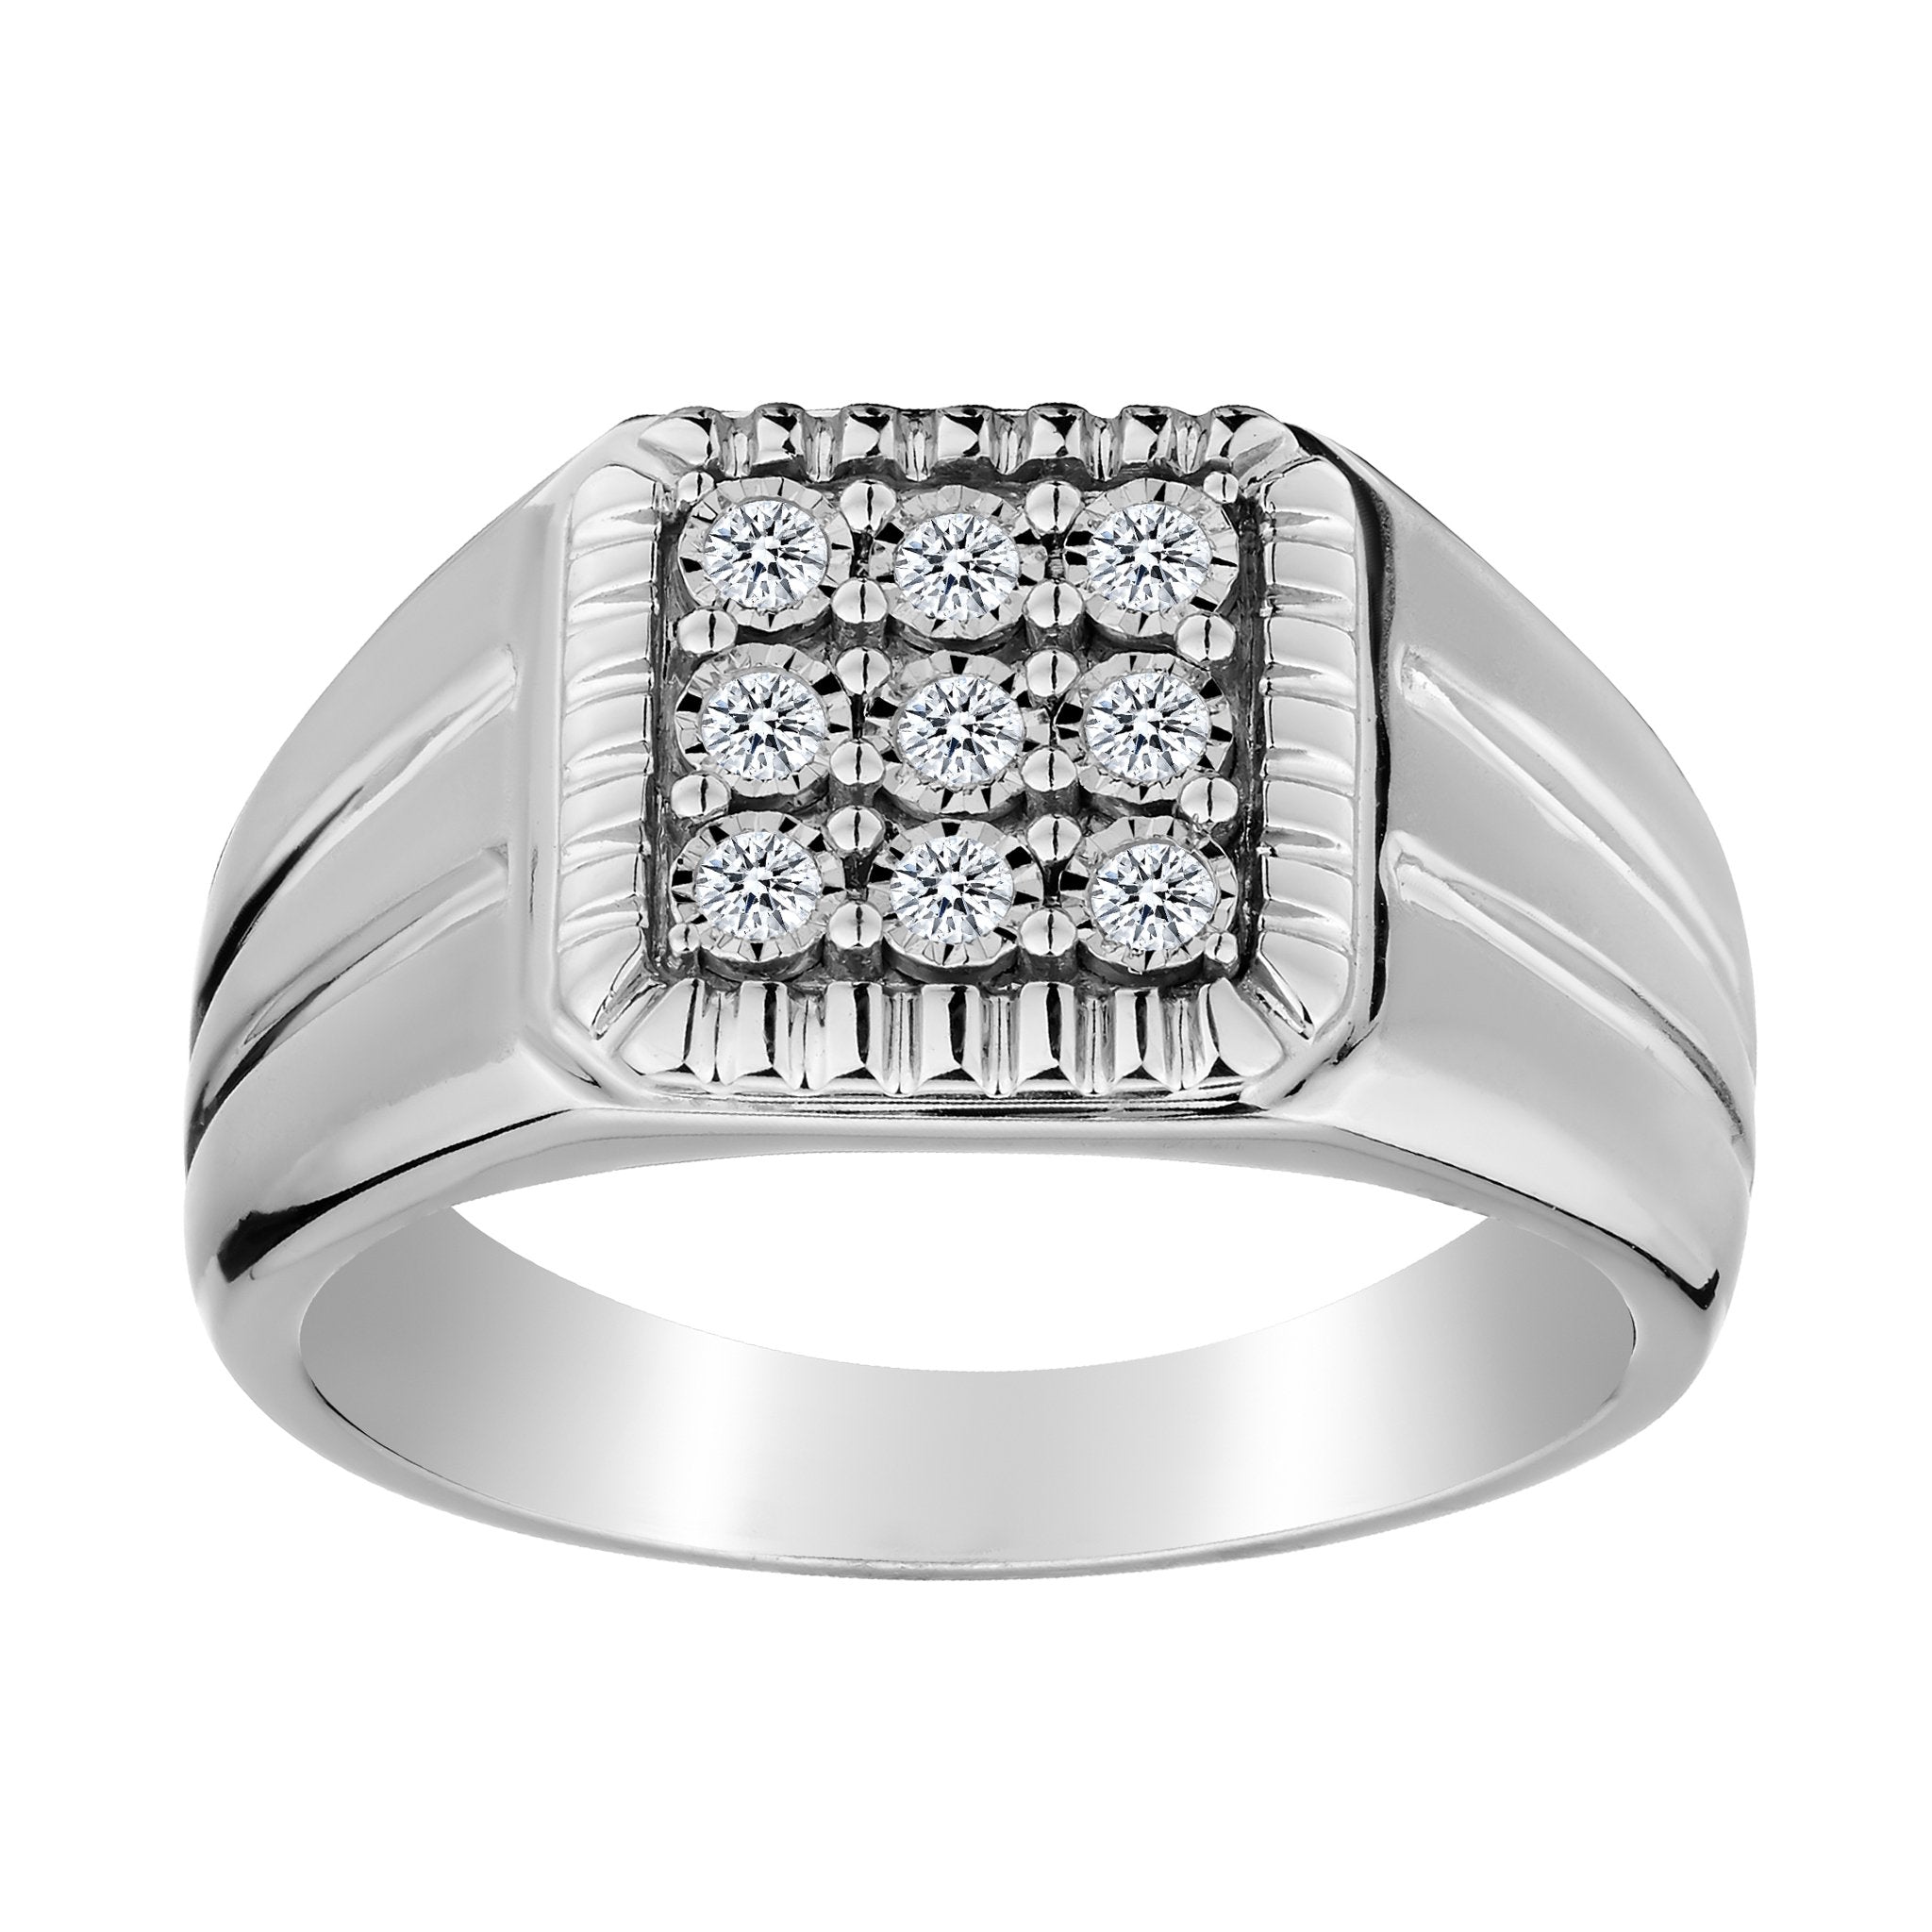 .20 Carat of Diamonds Gentleman's Ring, 10kt White Gold…...................NOW